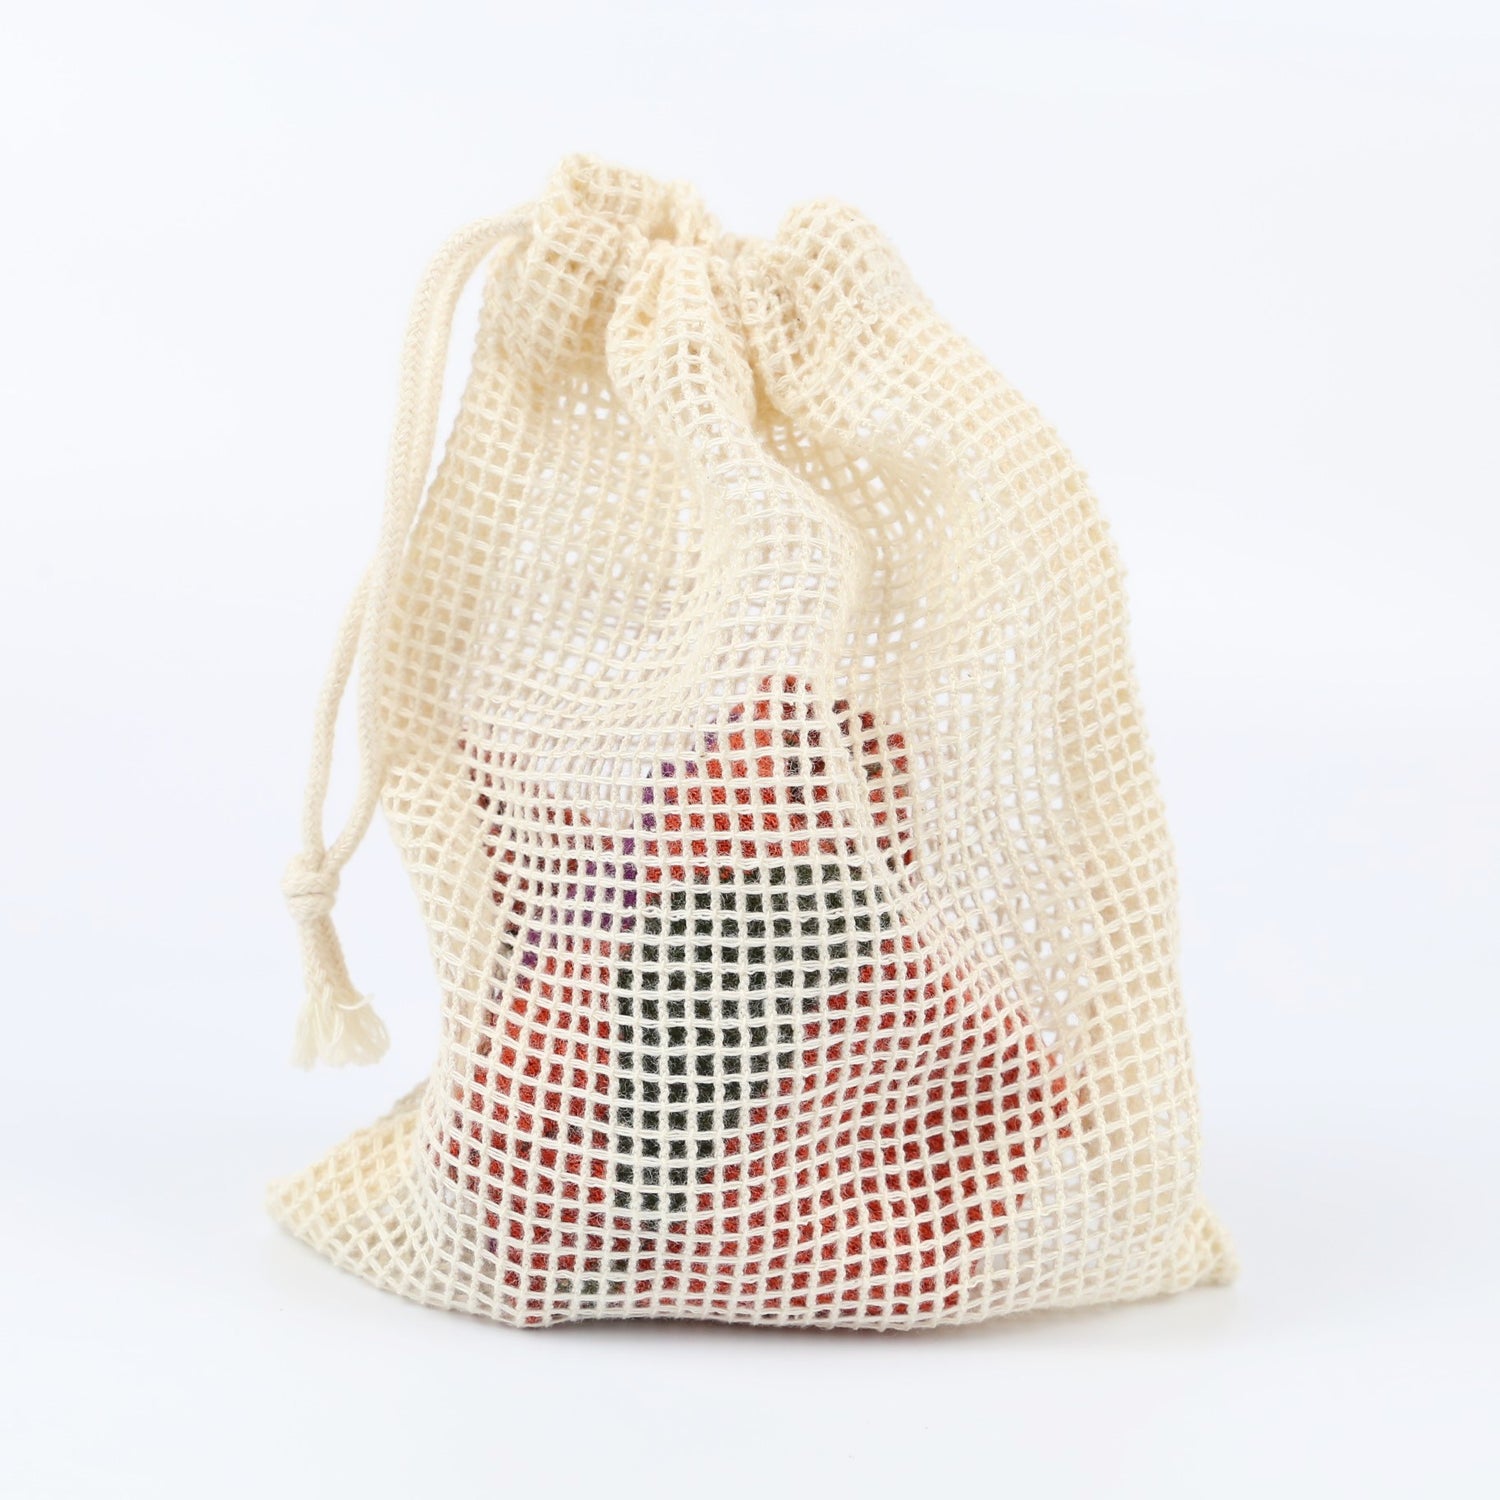 small organic cotton mesh bag perfect for sanitary cloths